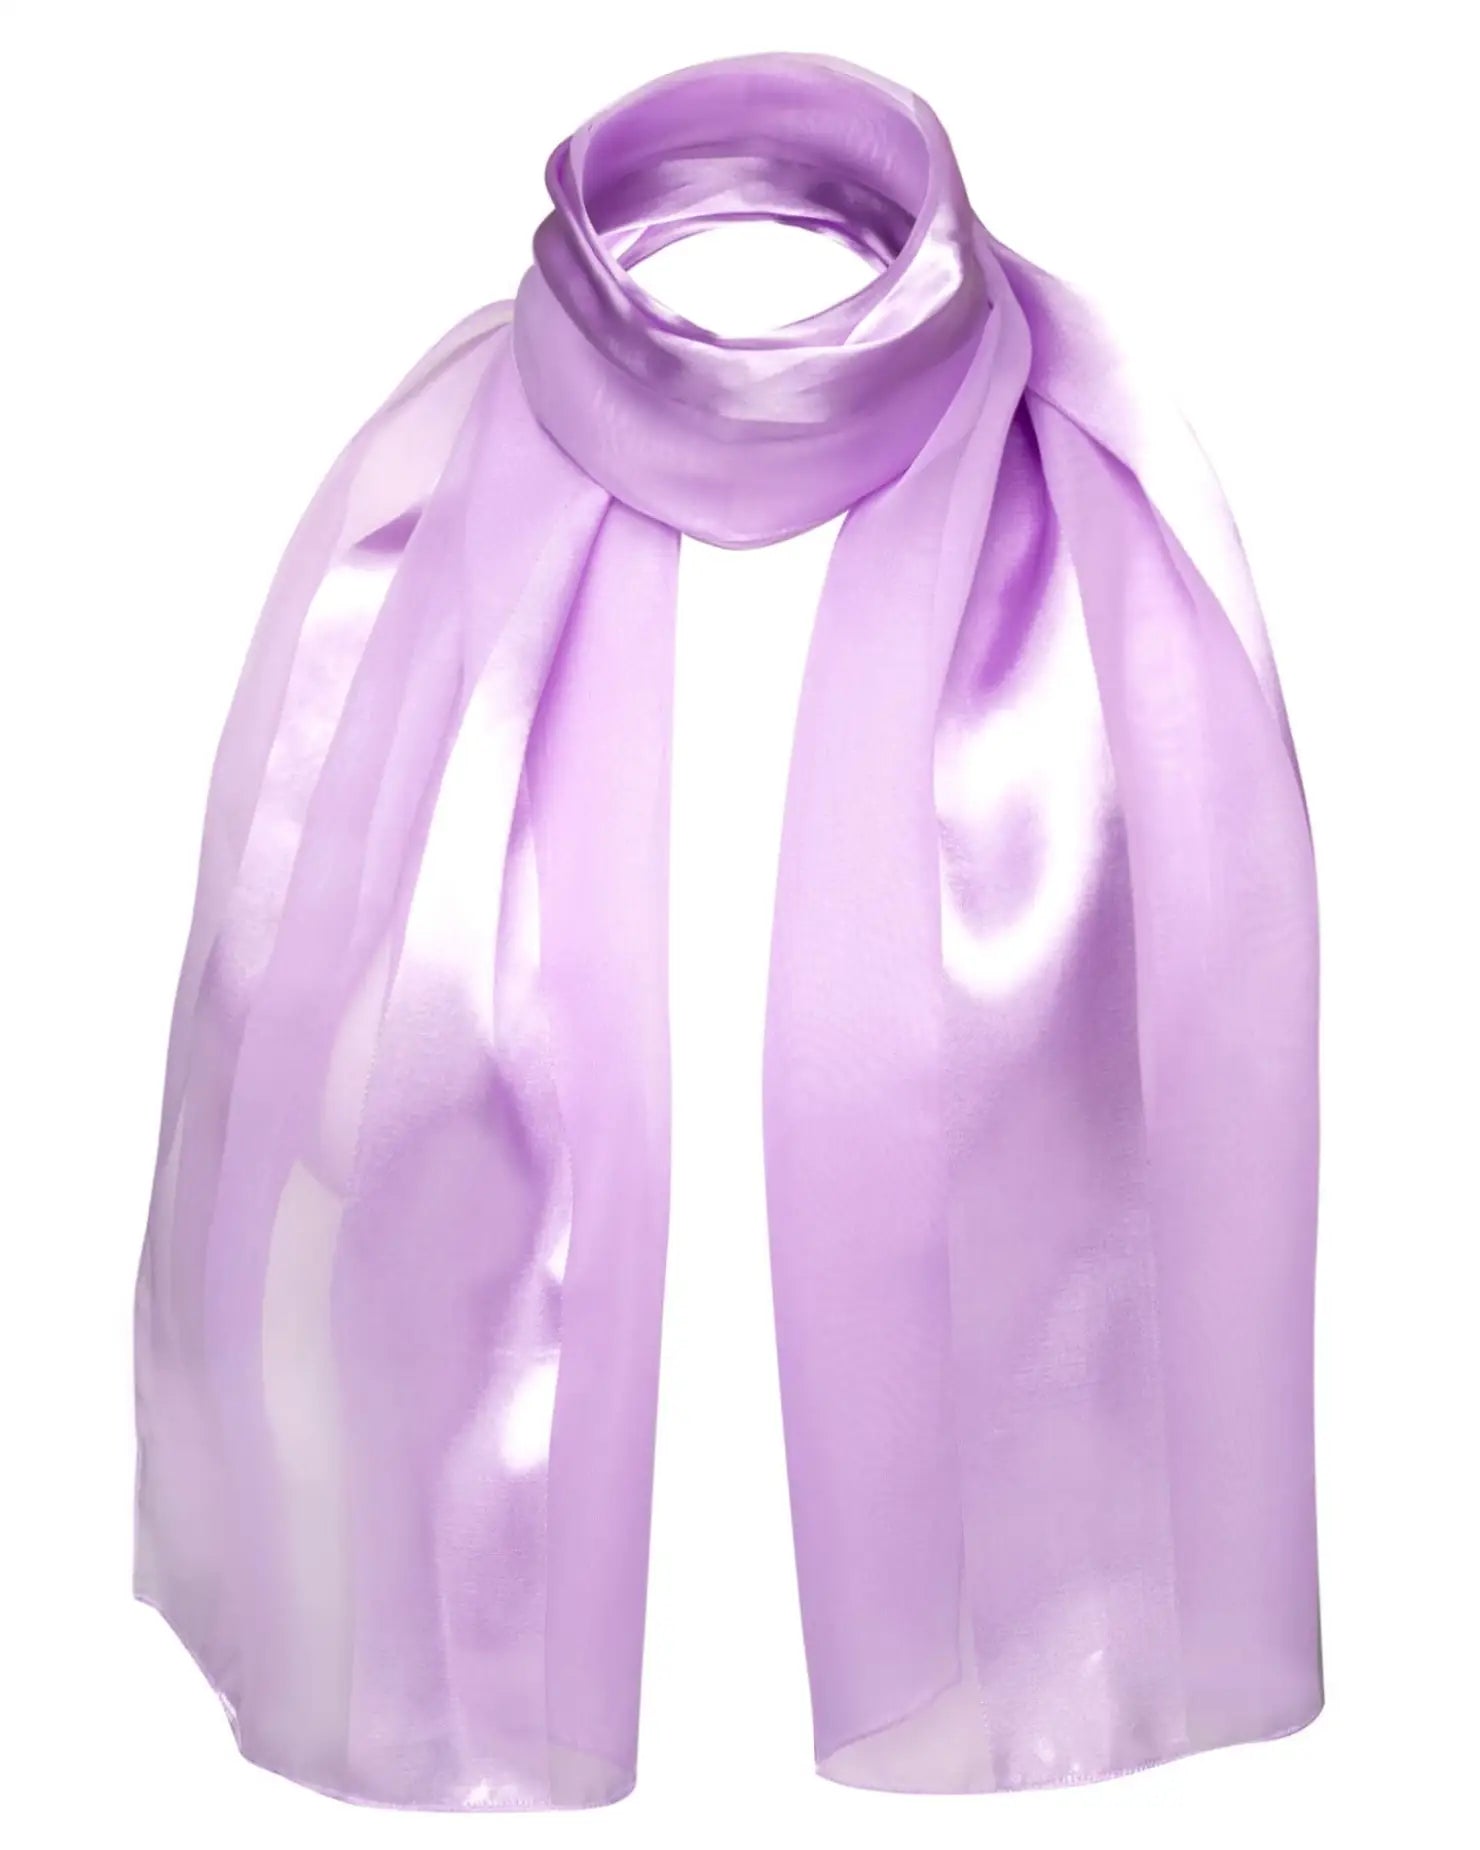 Purple satin stripe scarf on white background.